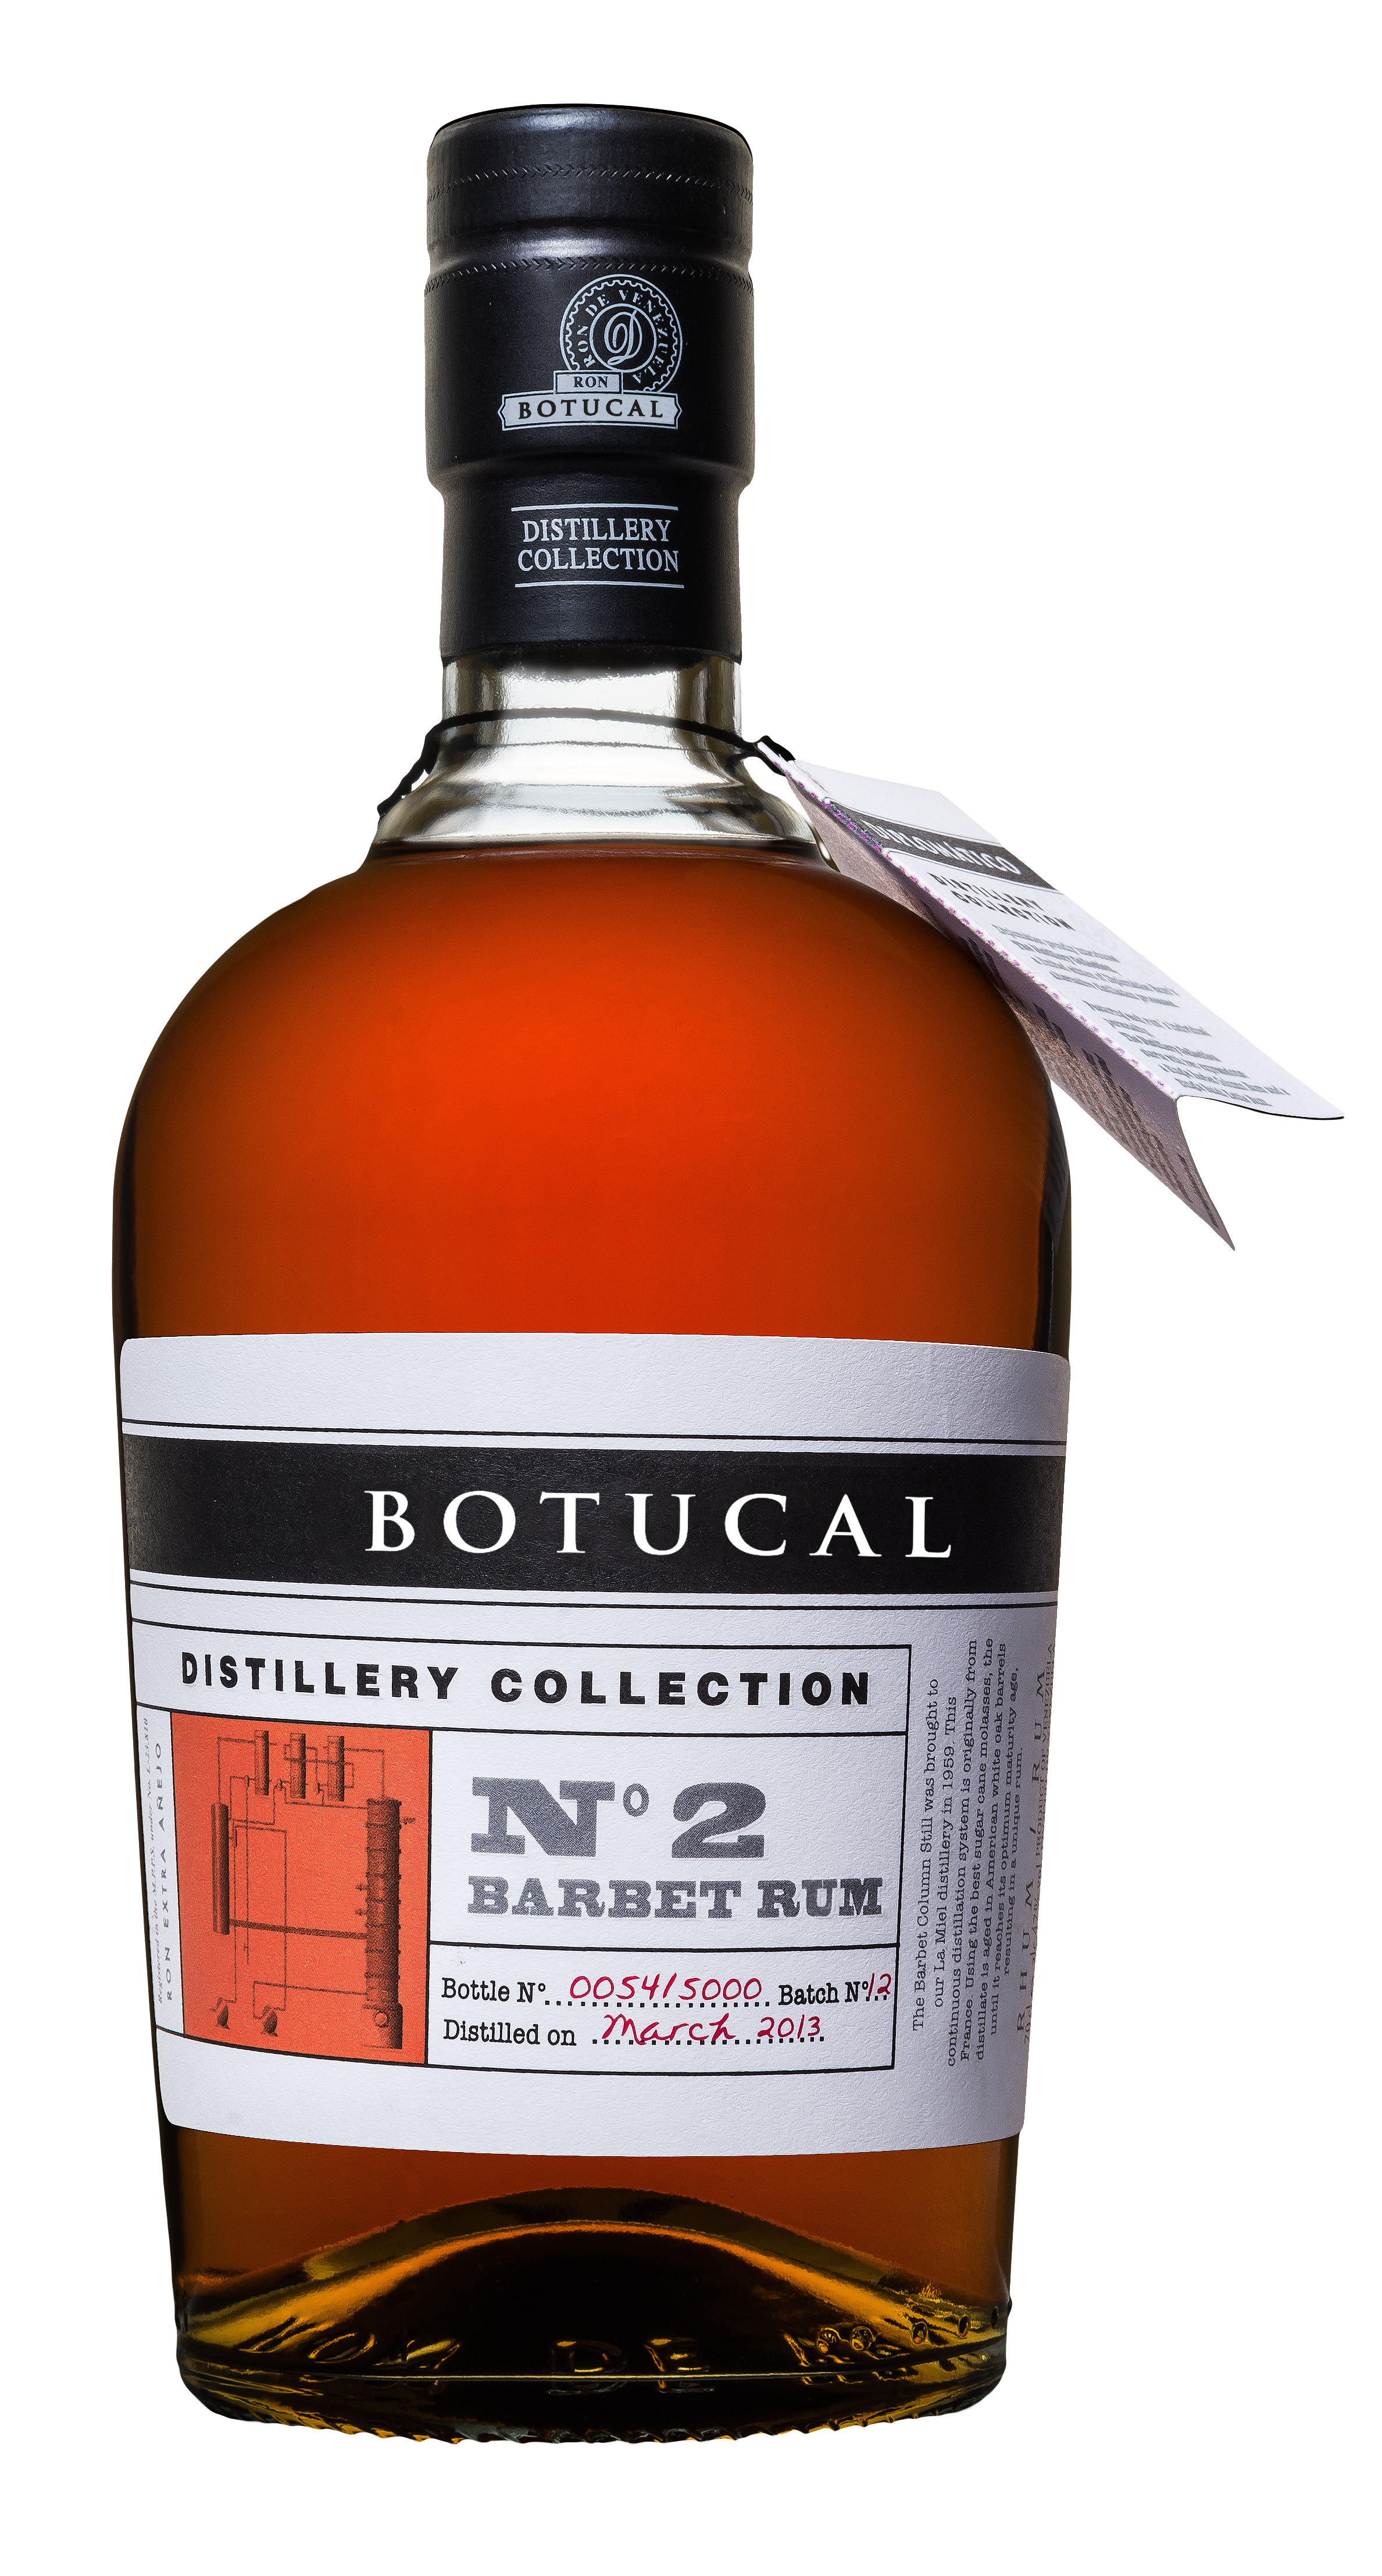 Botucal No2 Barbet Rum Rhum 0,70l (47% Vol) exklusive Sonderausgabe special limited edition distillery collection Ron de Venezuela - [Enthält Sulfite]